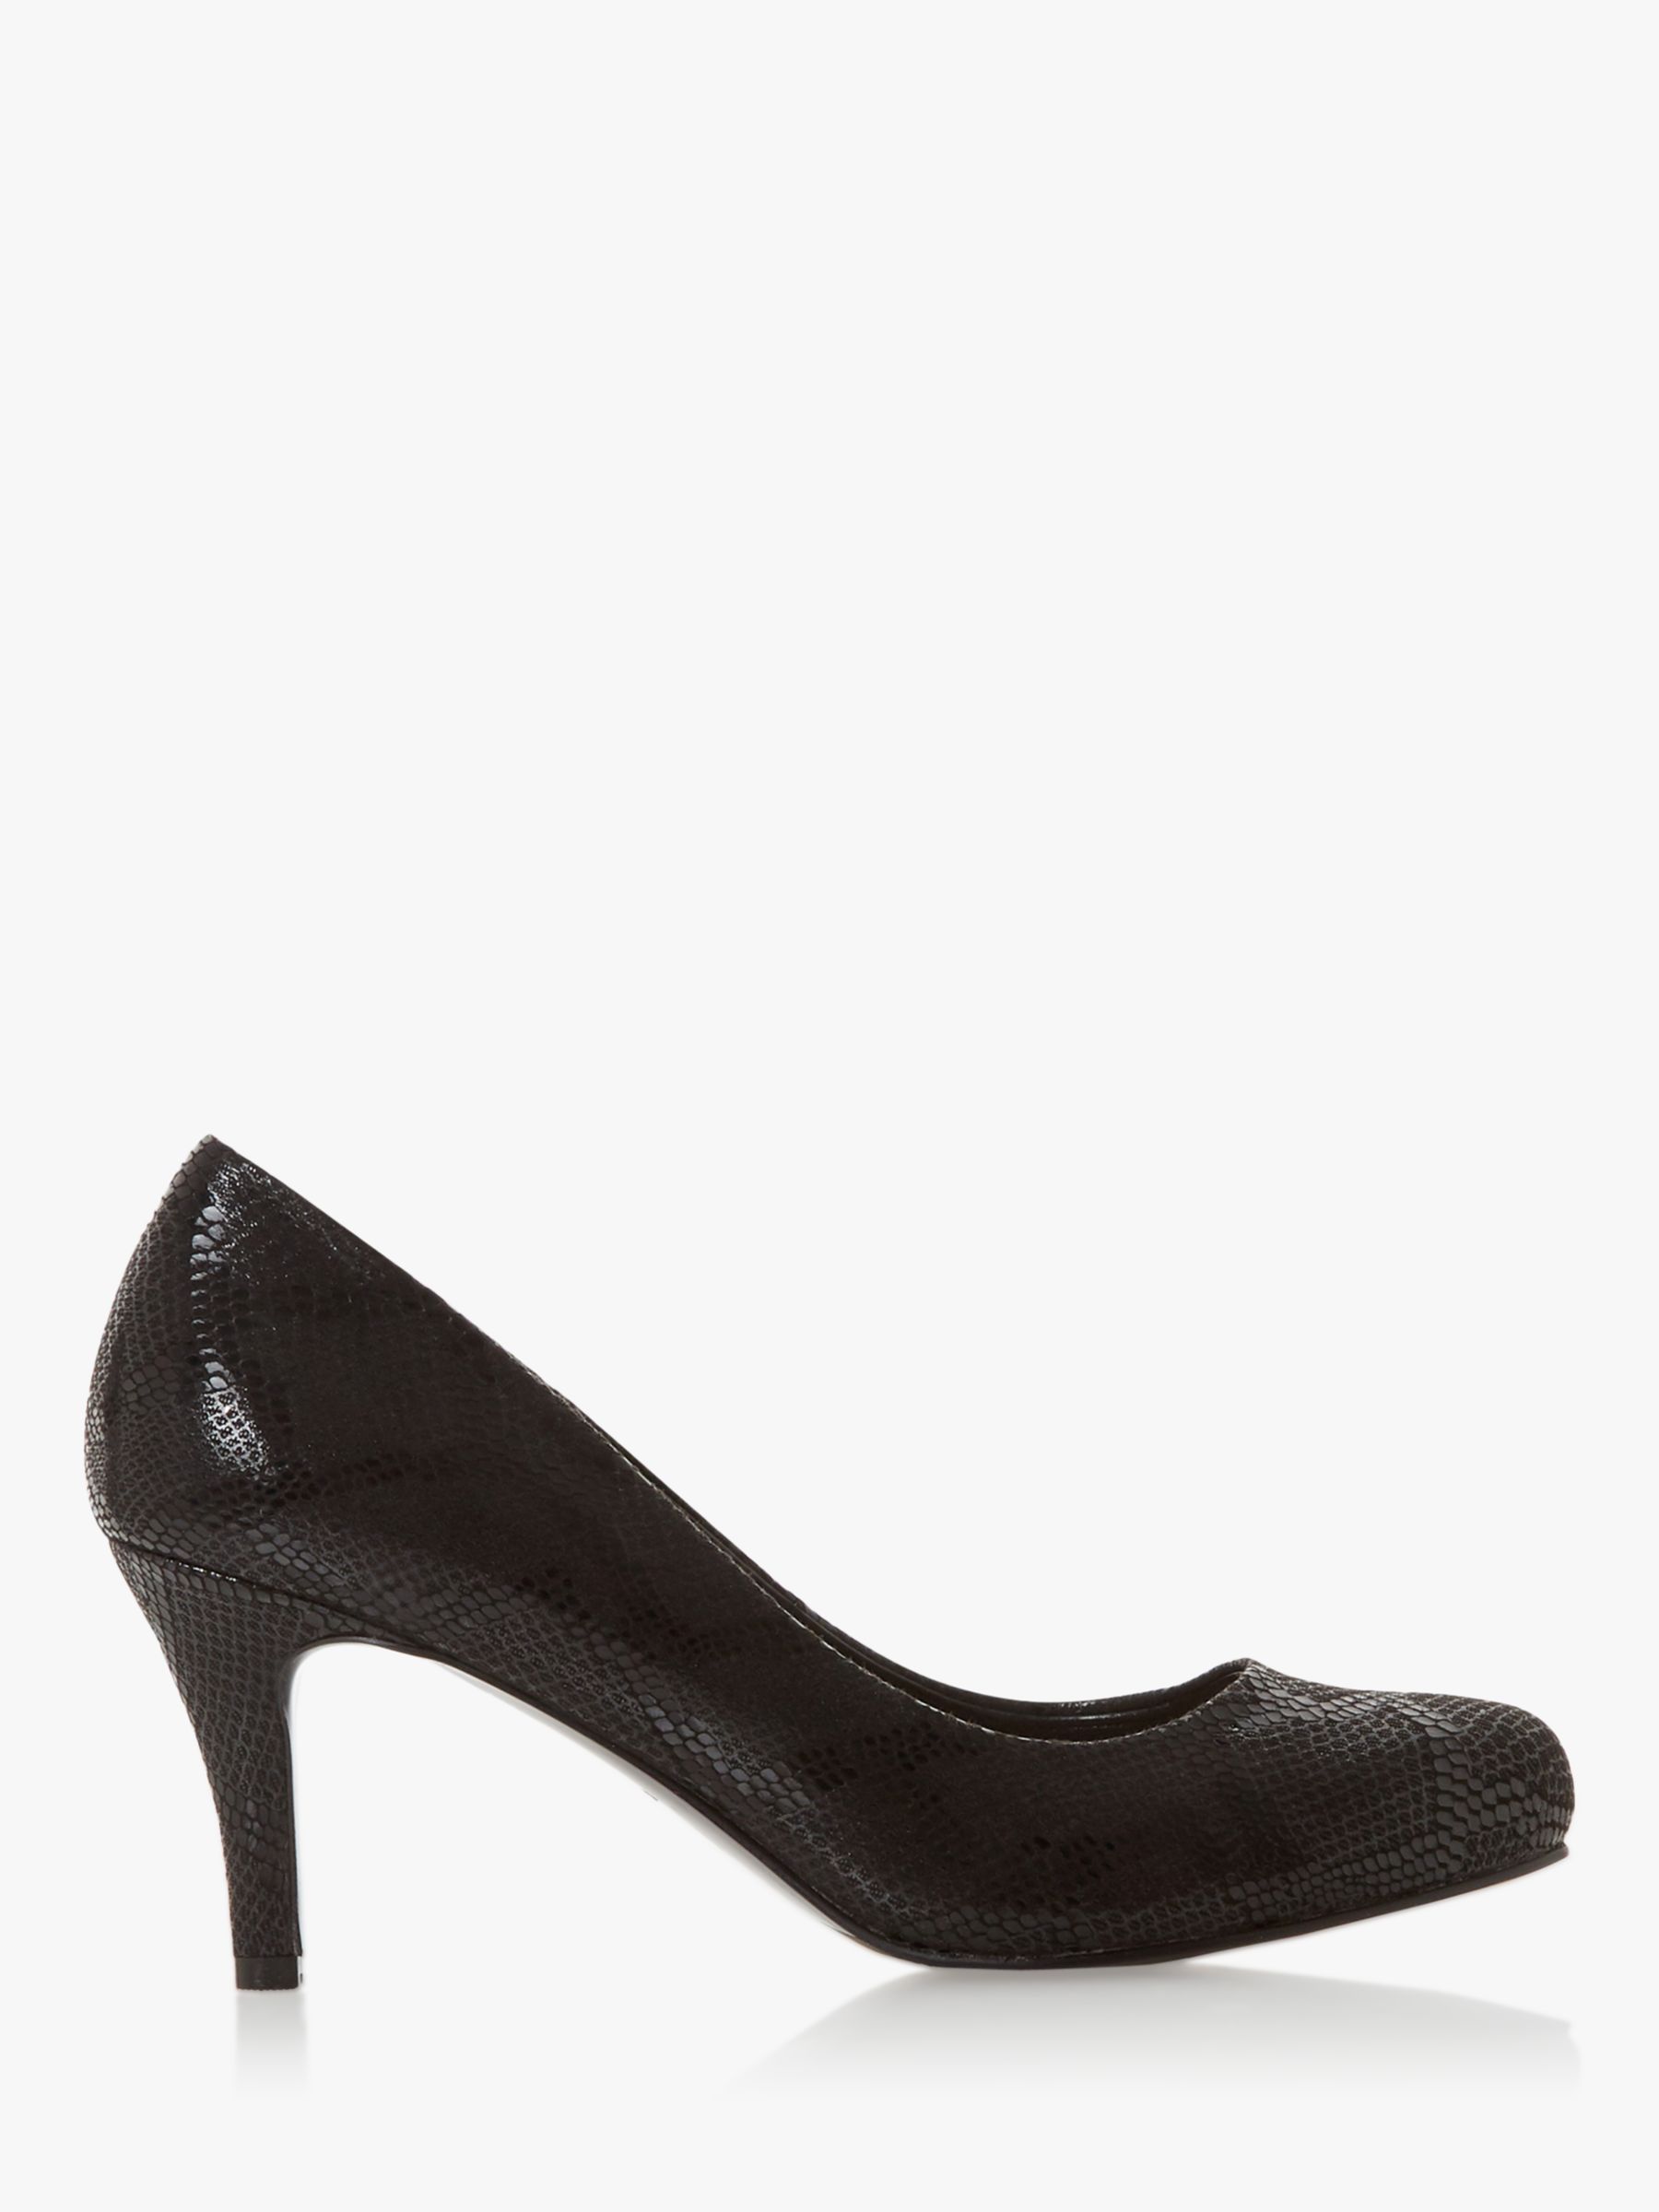 black court shoes mid heel